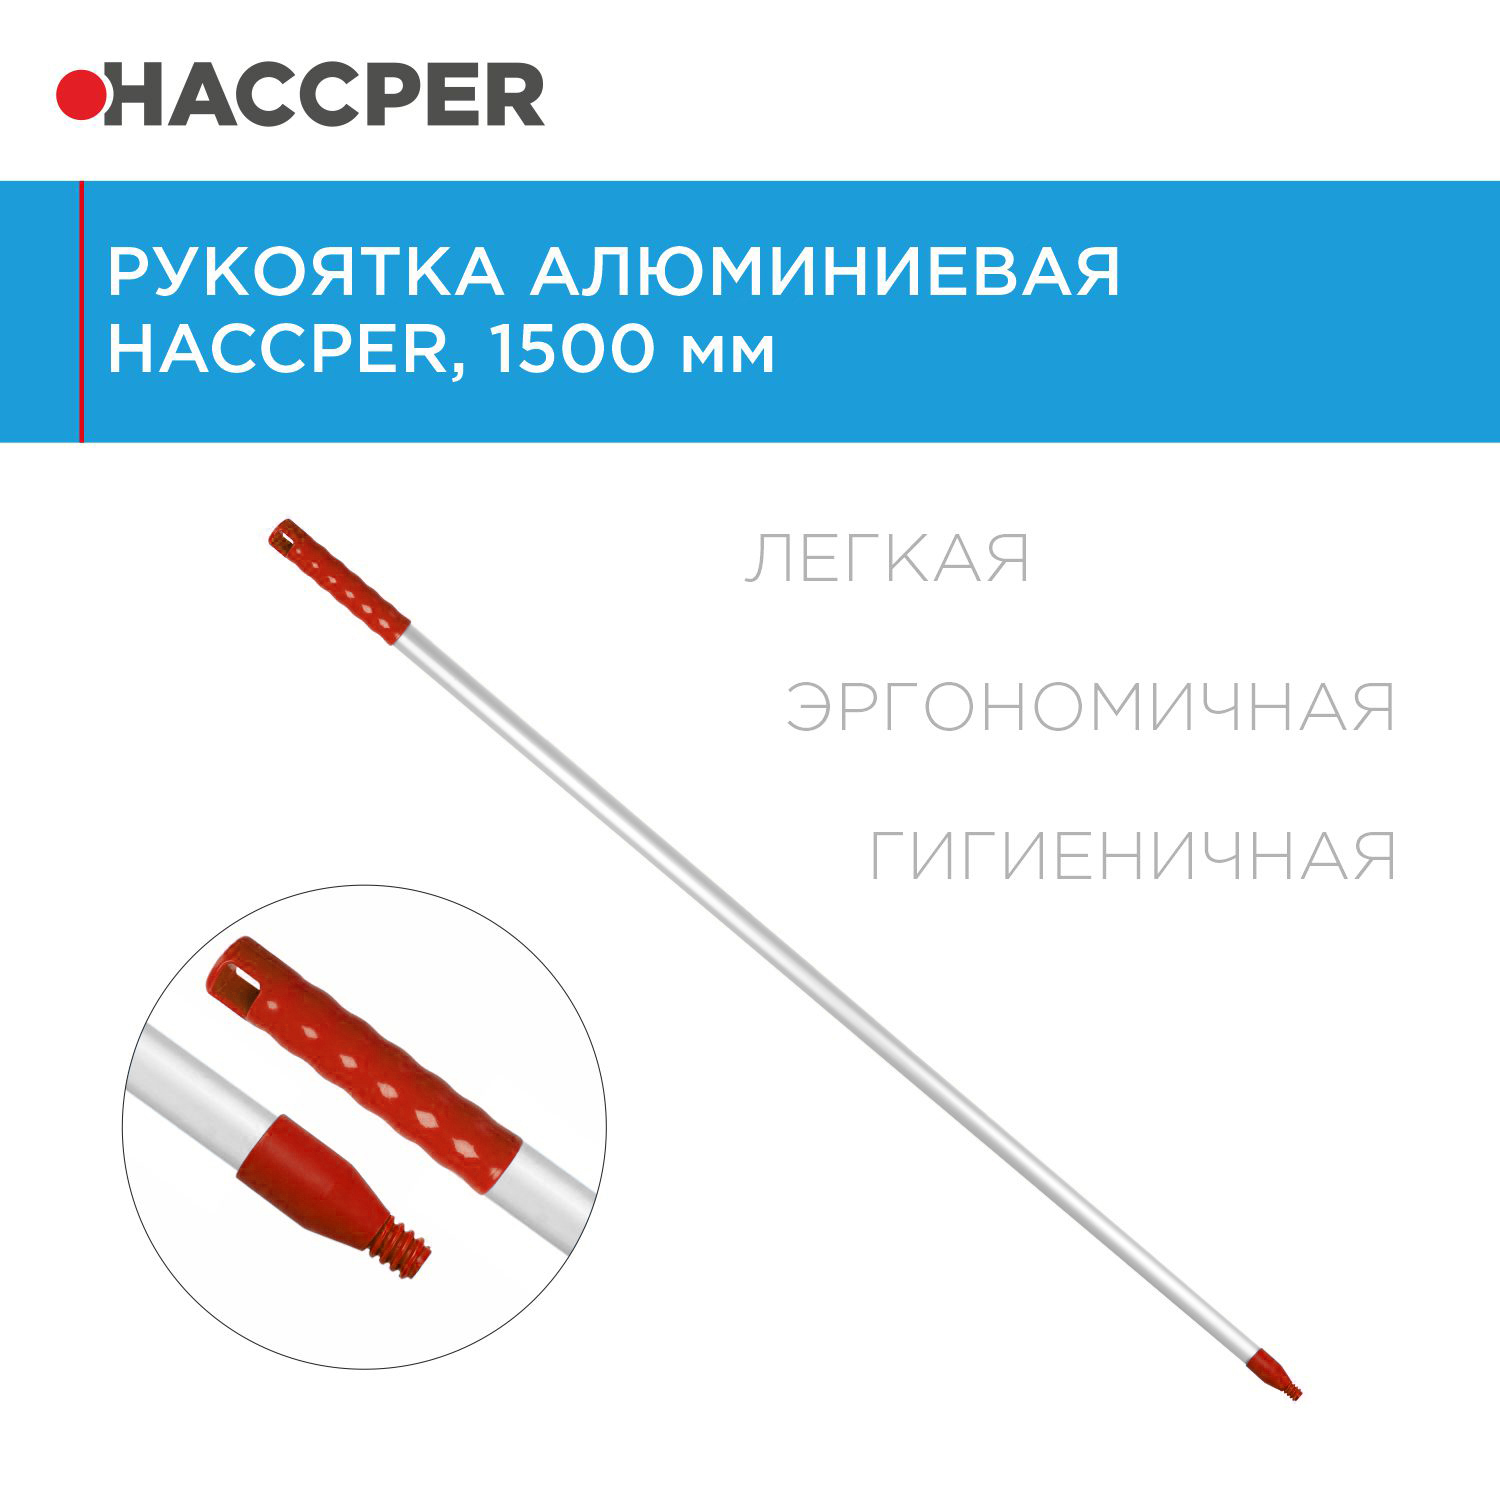 Рукоятка HACCPER алюминиевая, 1500 мм, красный